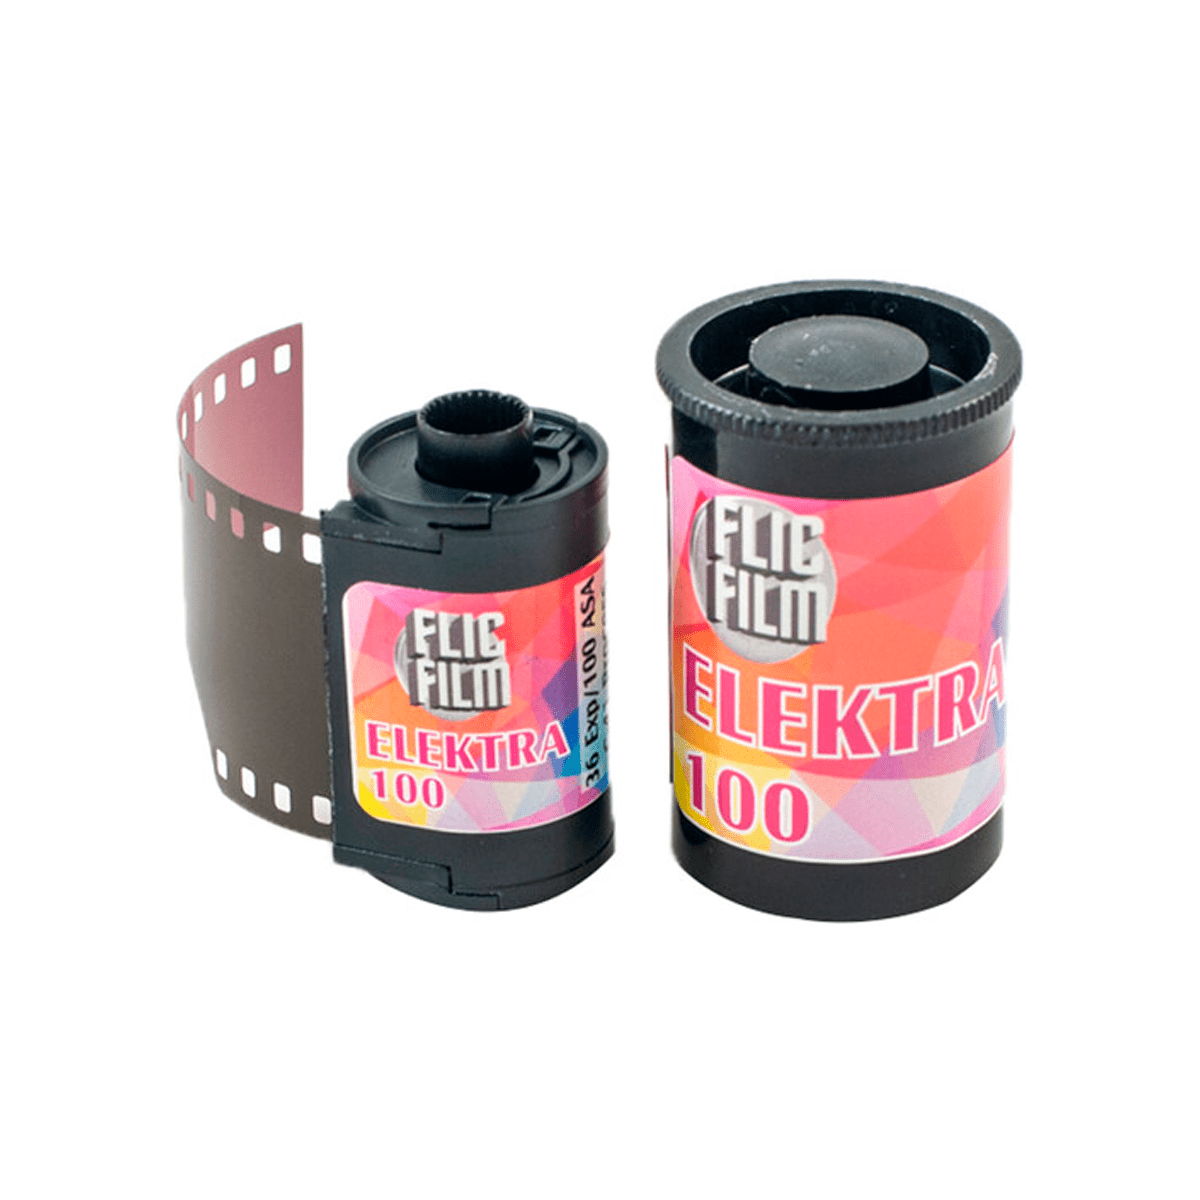 Flic Film Elektra 100 35mm Película Color 36 exp C-41 - GG GAMER STORE